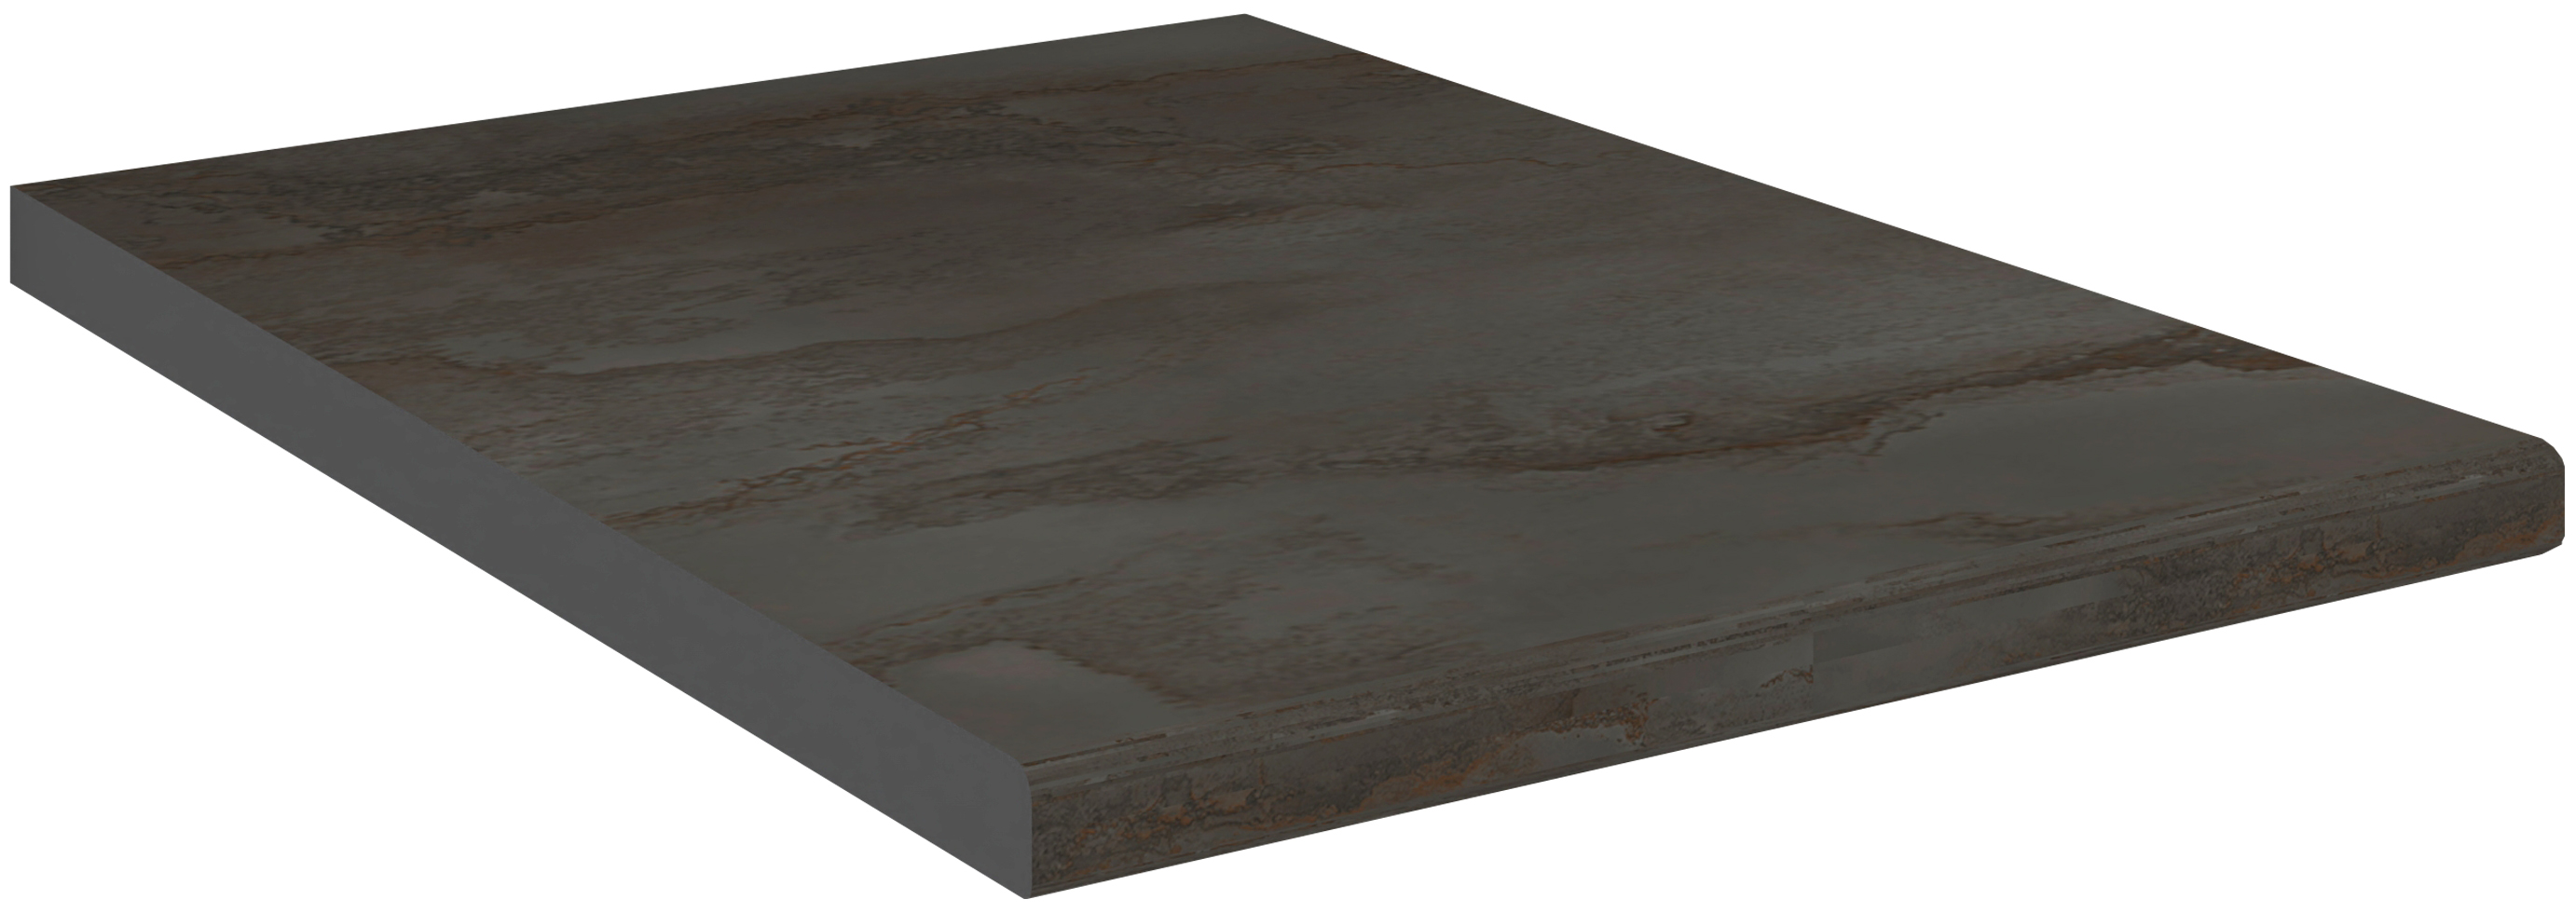 VCM NORDIC Esilo 60 bordplade, kvadratisk - antracitgrå komposittræ (60x60)